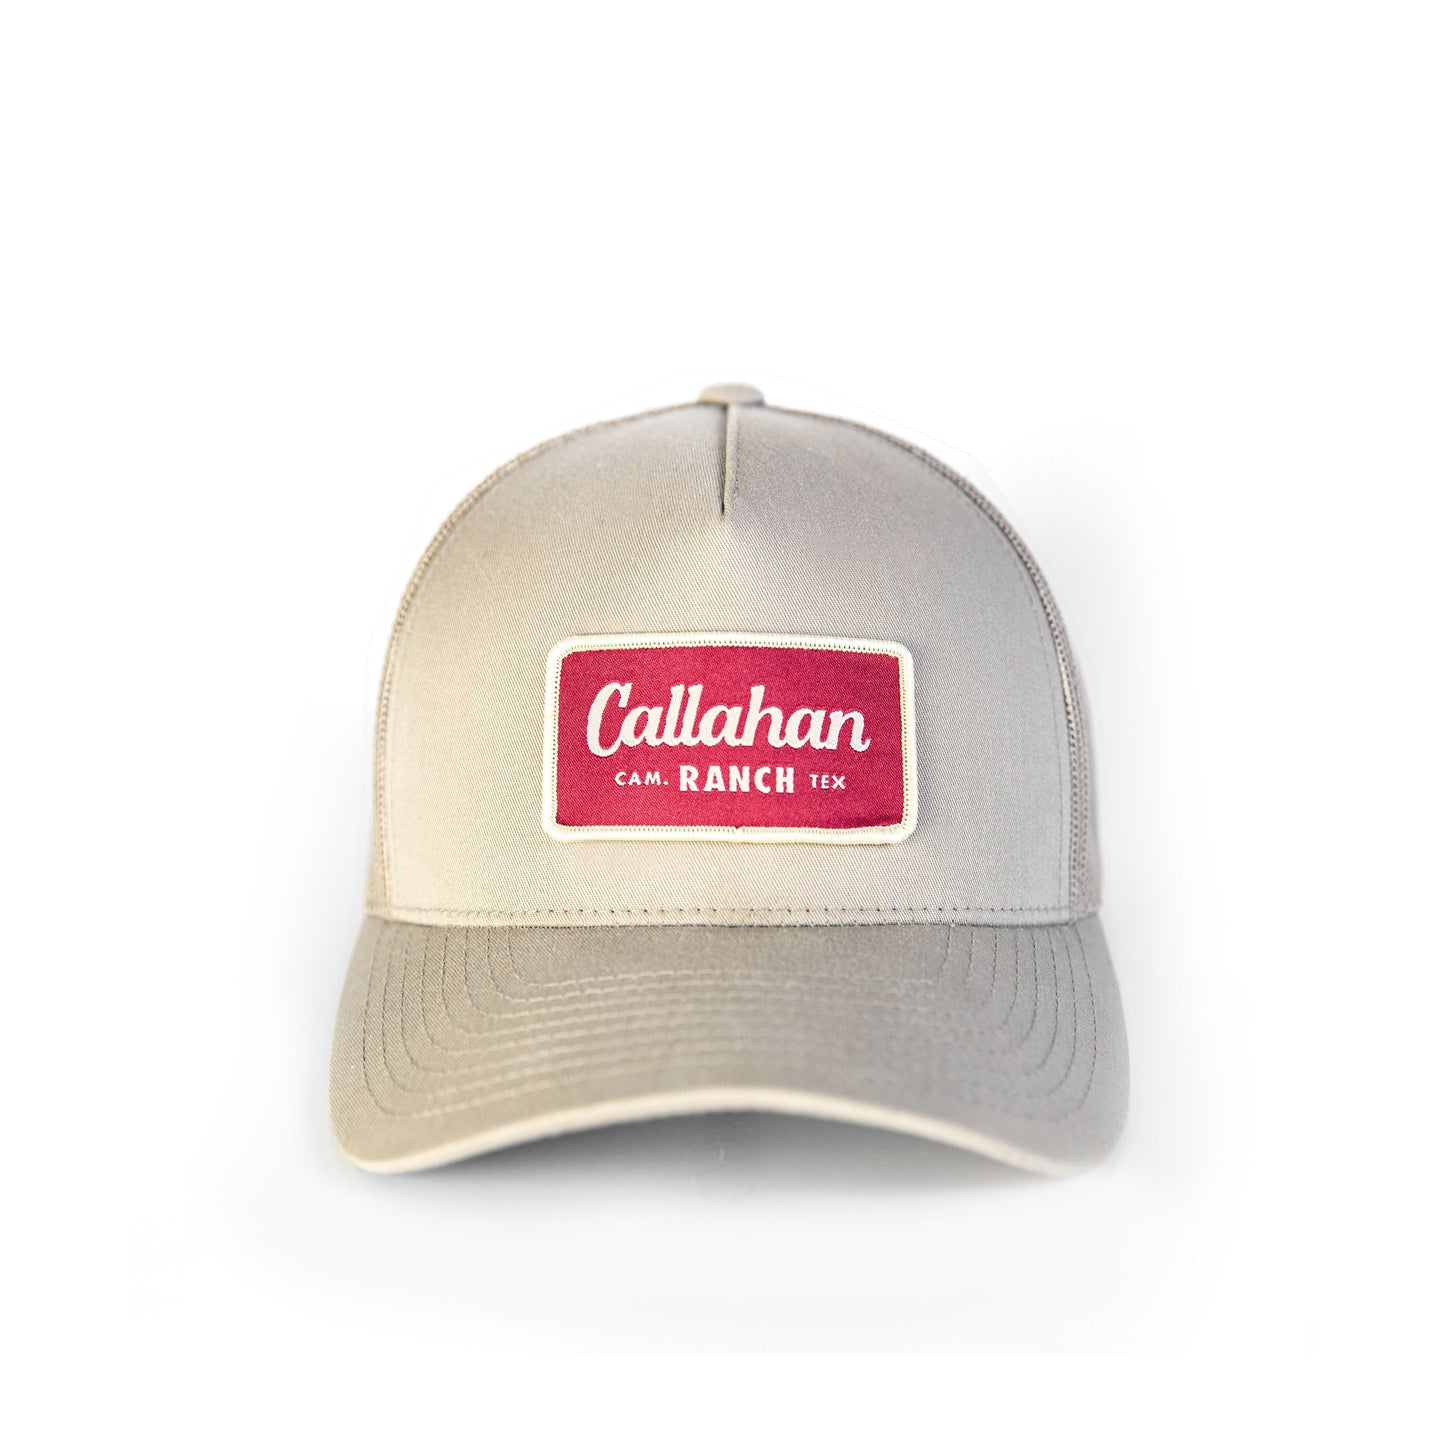 Callahan Ranch Tan Trucker Hat